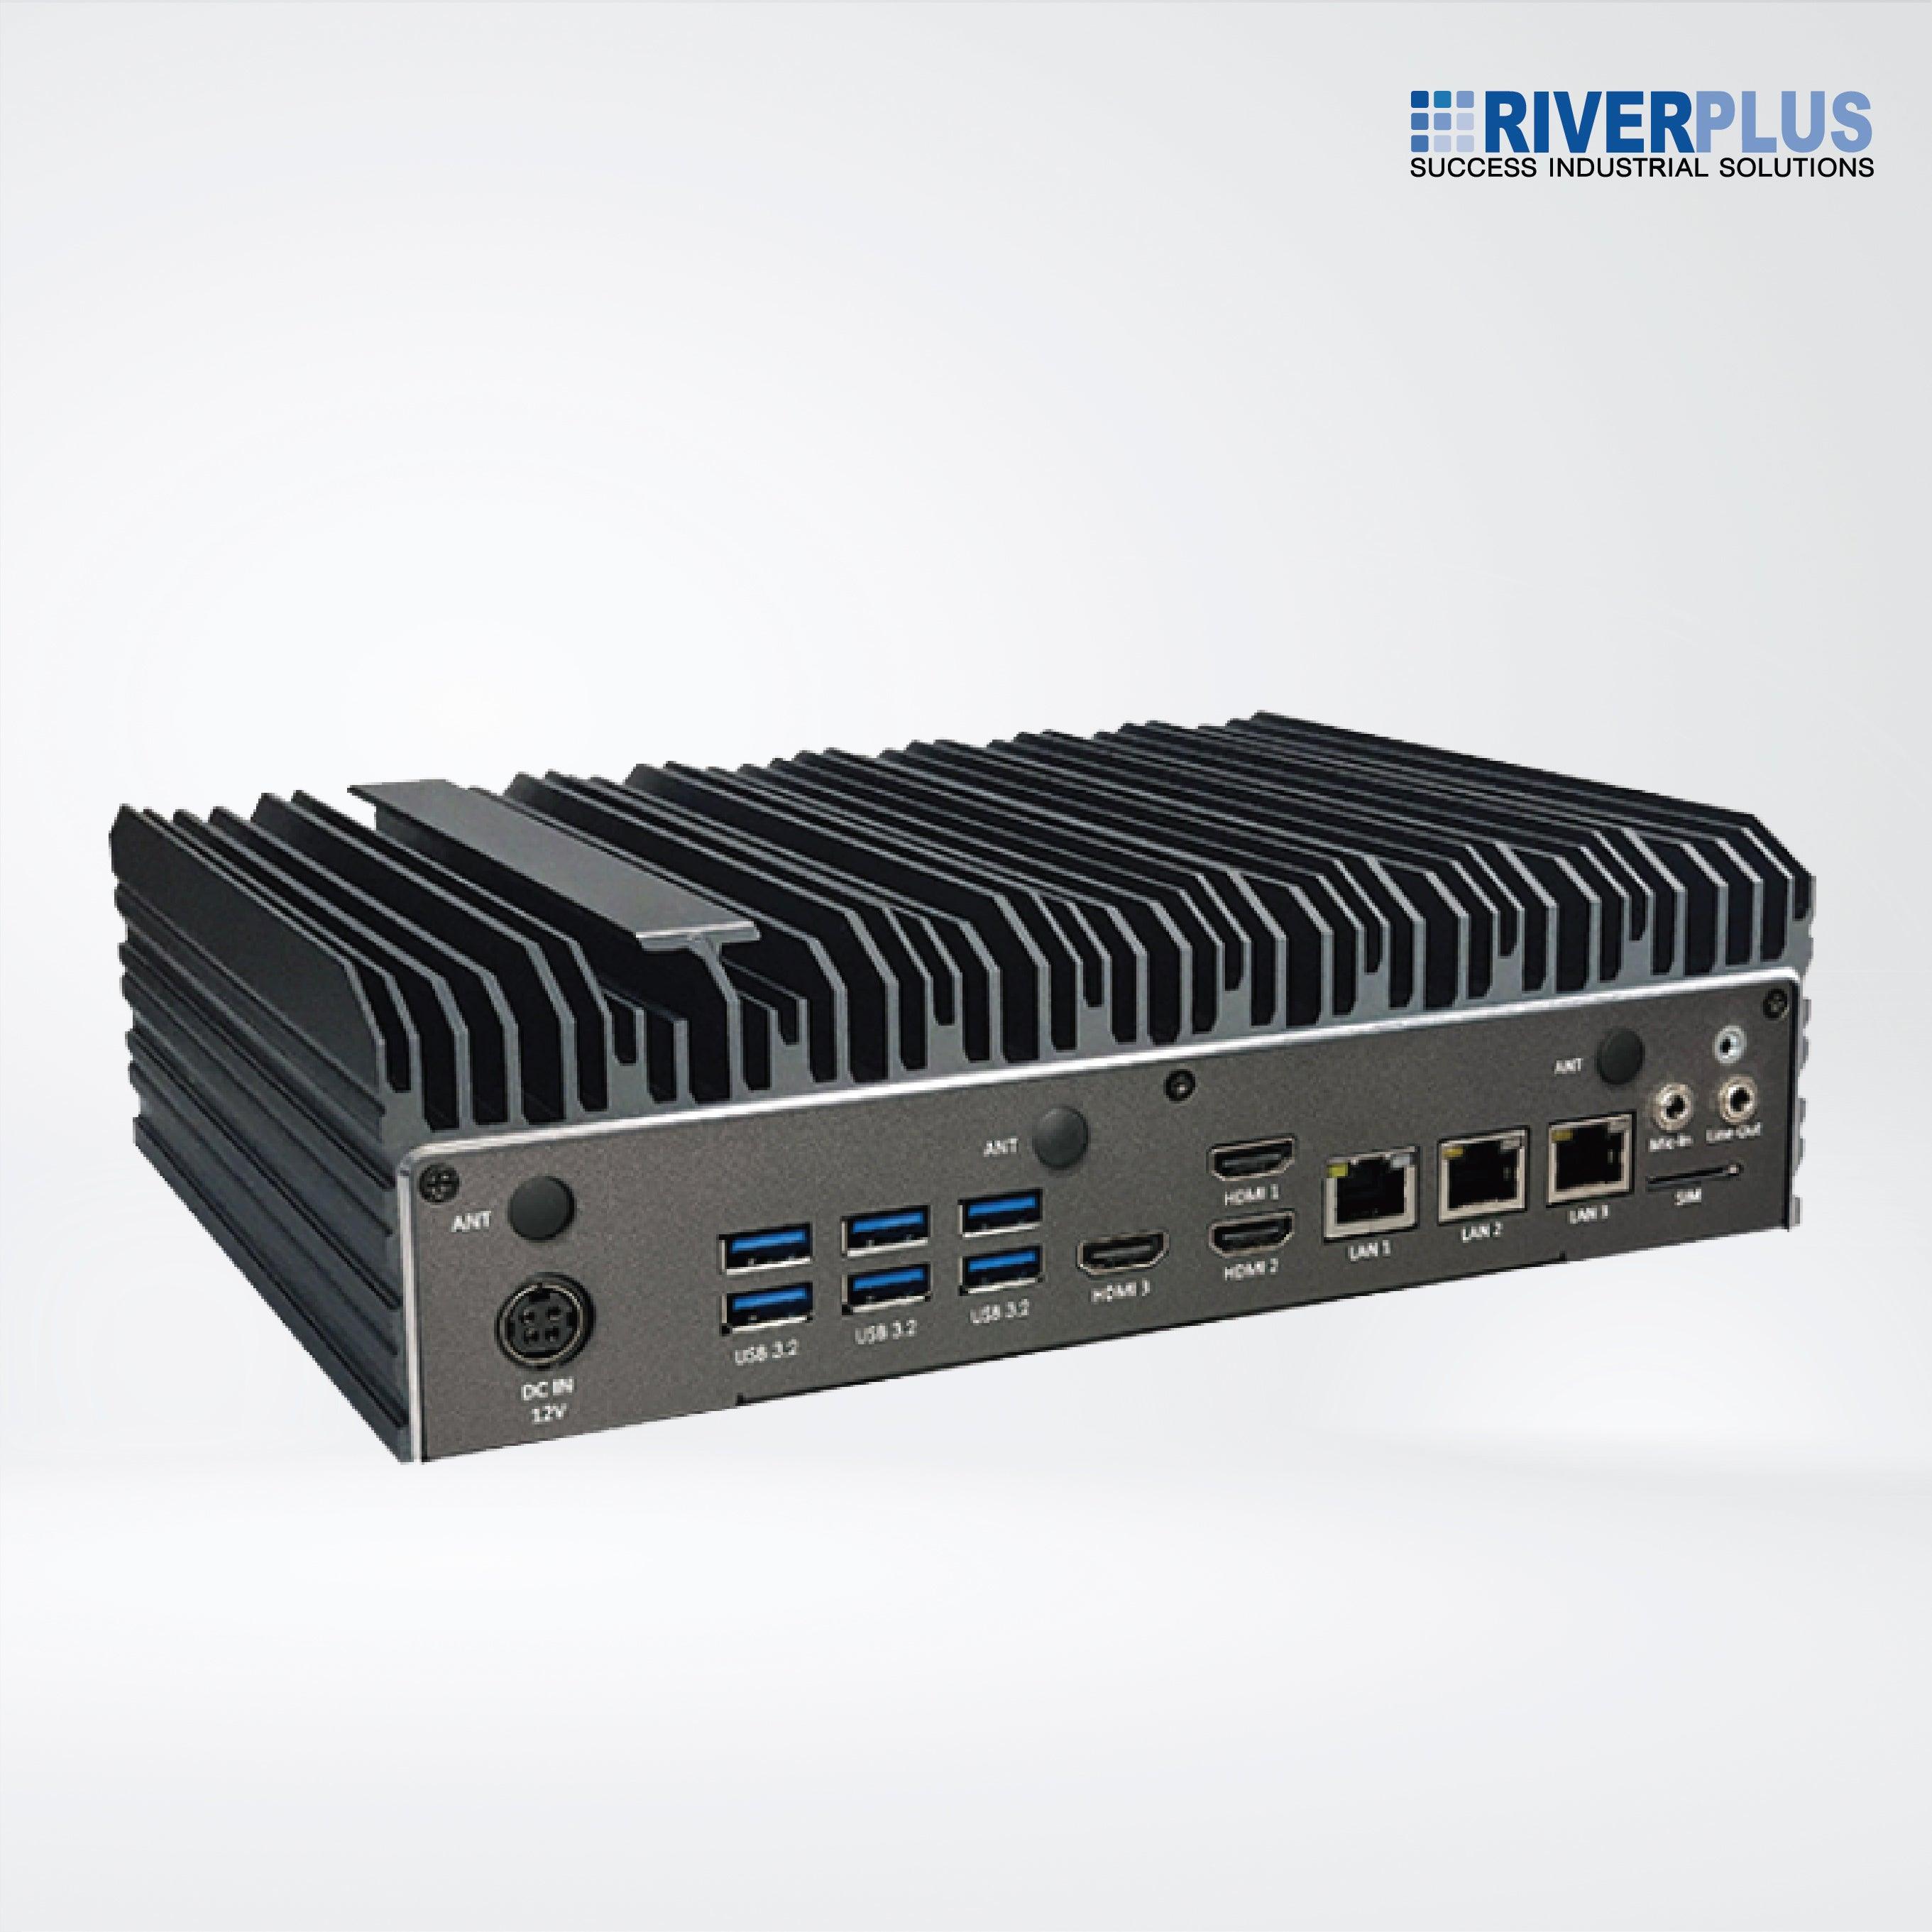 NDiS B561 Visual Edge Computer Powered by 12th Gen Intel® Core™ Processor - Riverplus